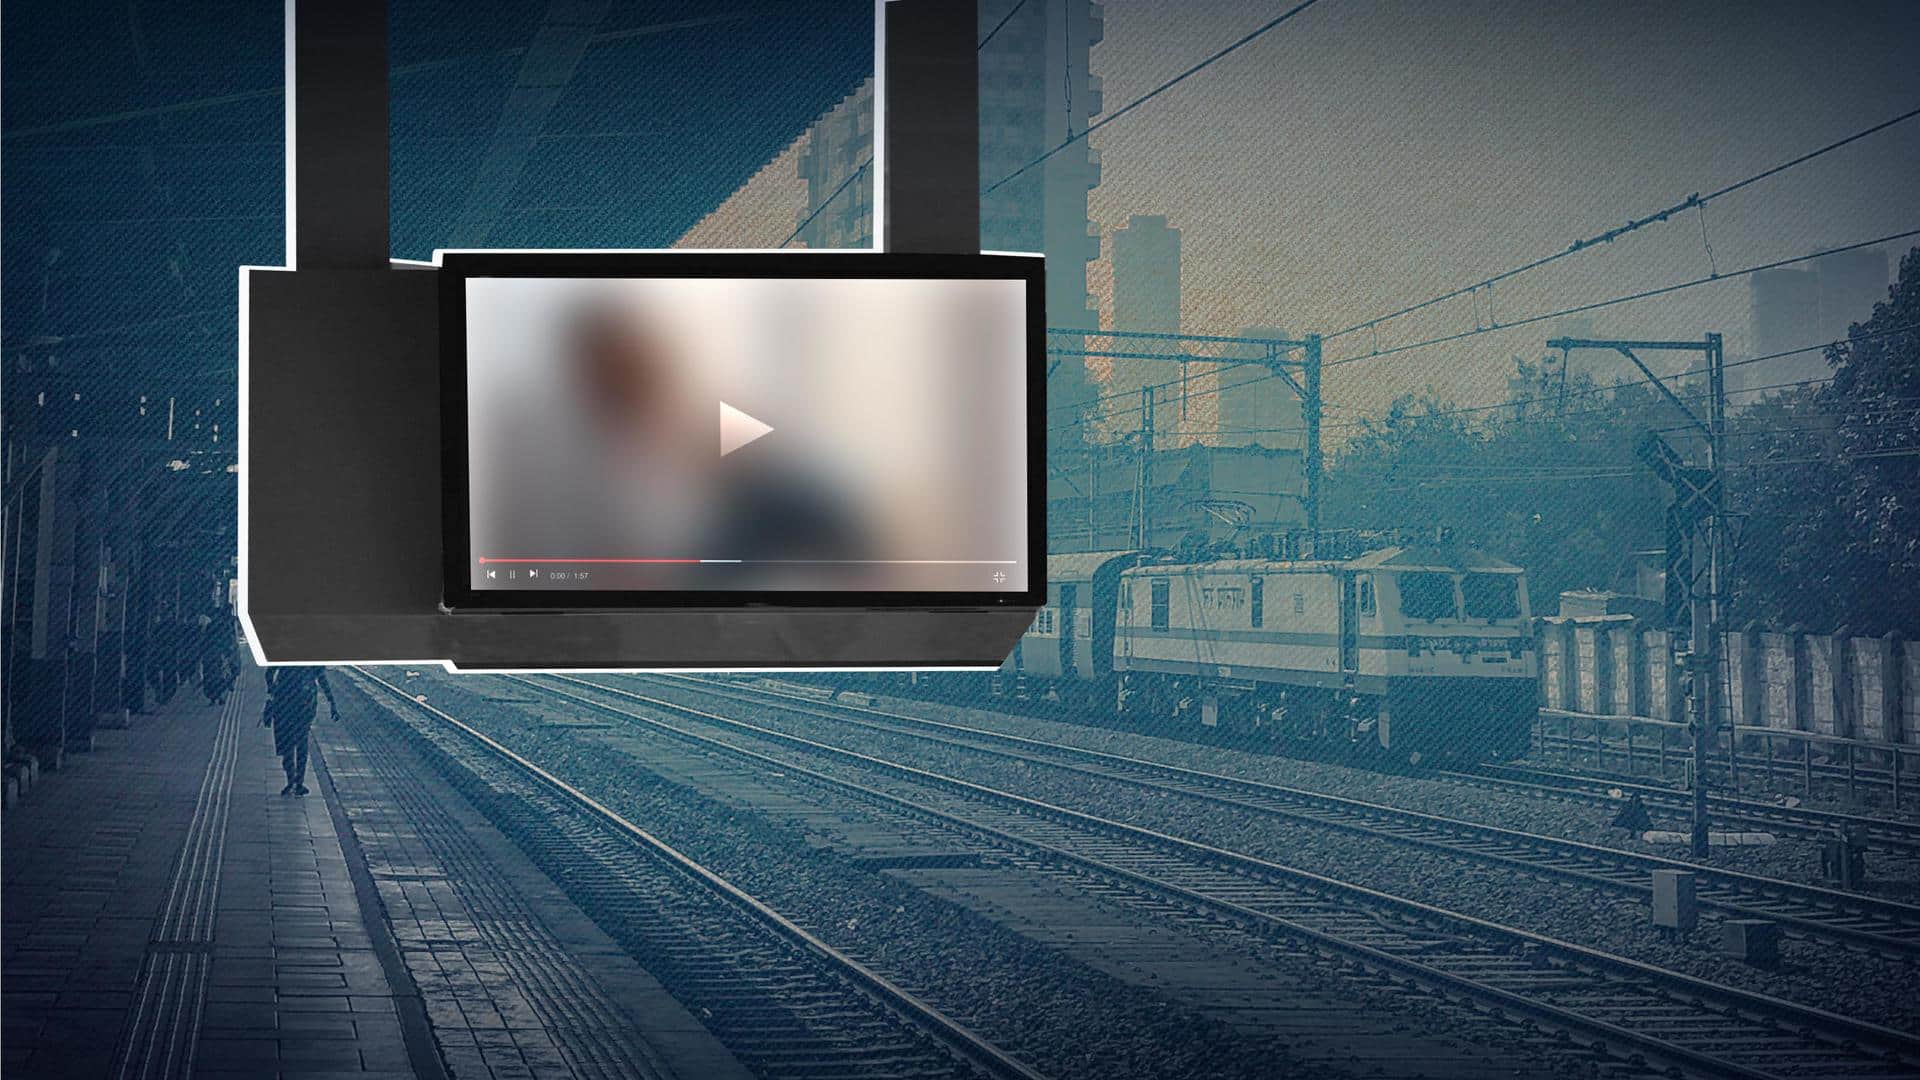 Bihar: Porn clip plays at Patna railway station TV screens